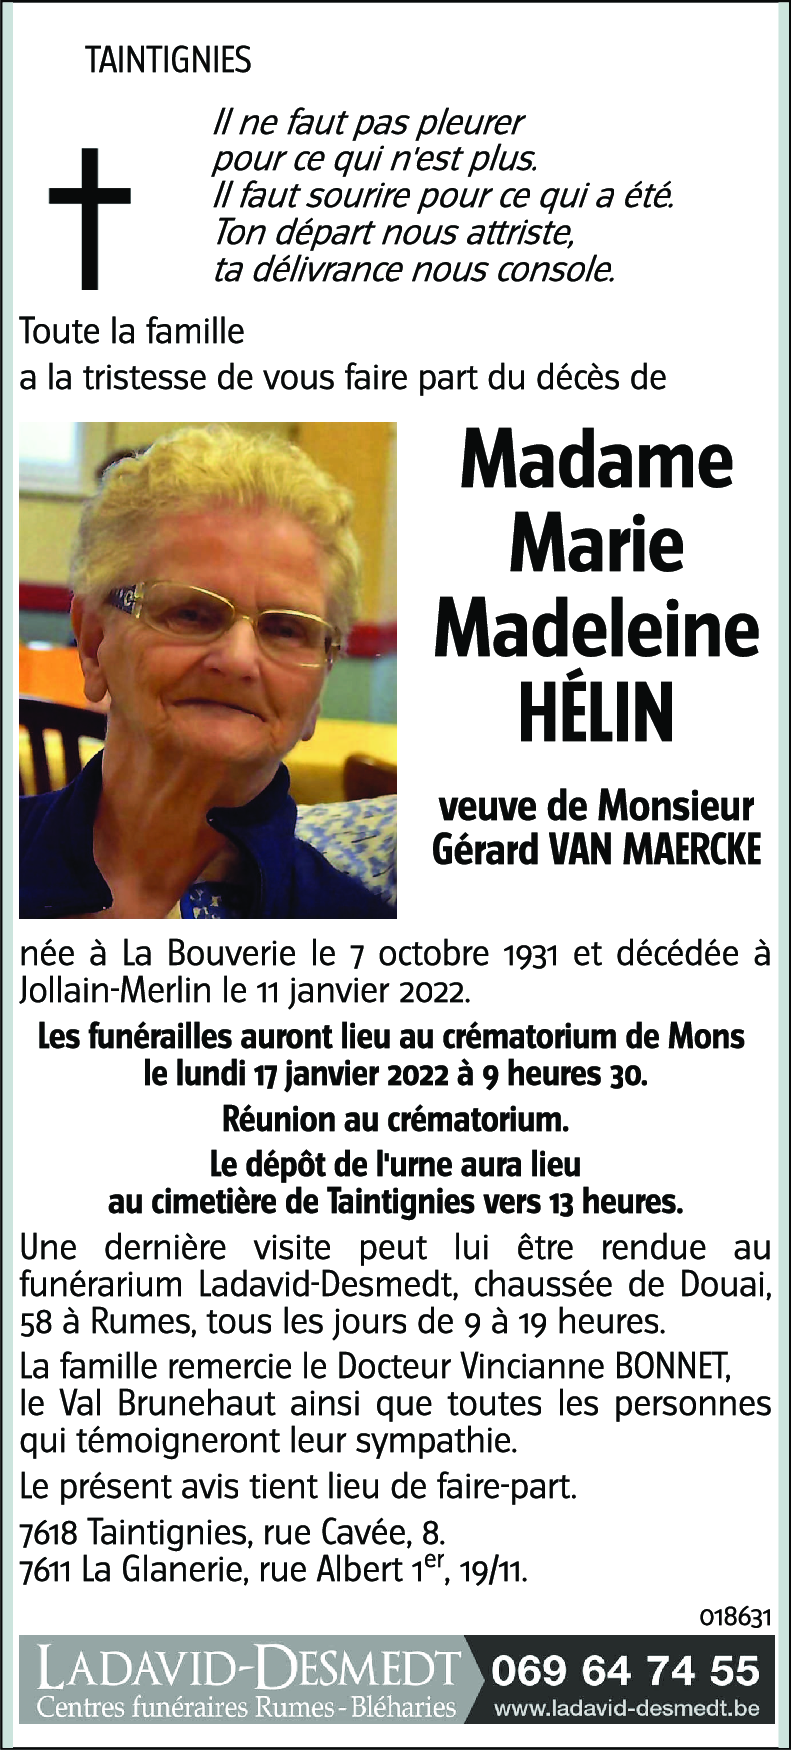 Marie Madeleine HÉLIN